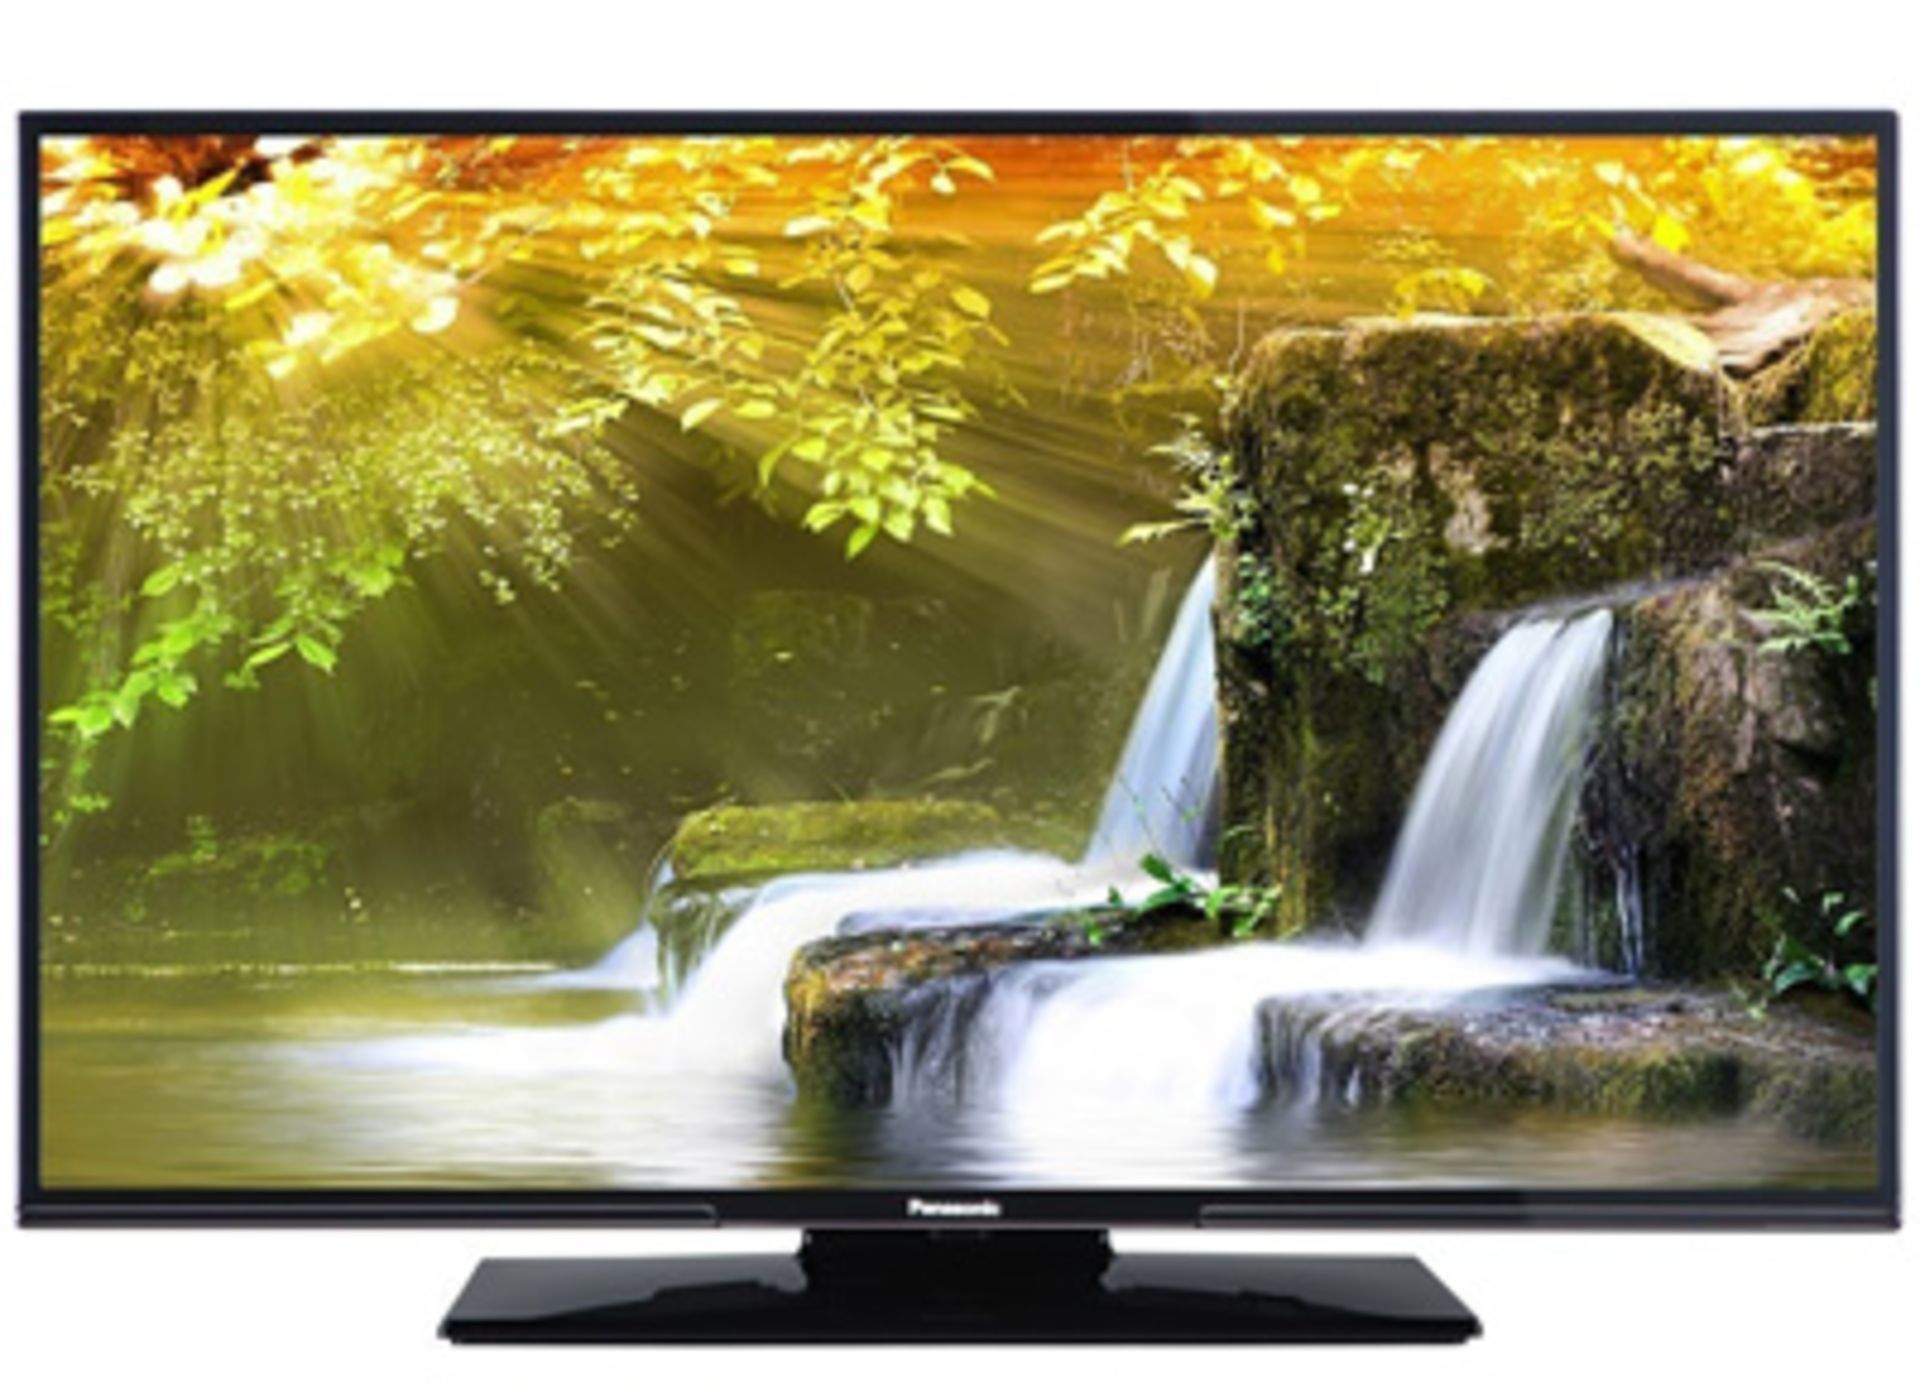 (T36) PANASONIC VIERA TX-55DX650B Smart 4k Ultra HD 55" LED TV. RRP £799. Experience beautiful 4k